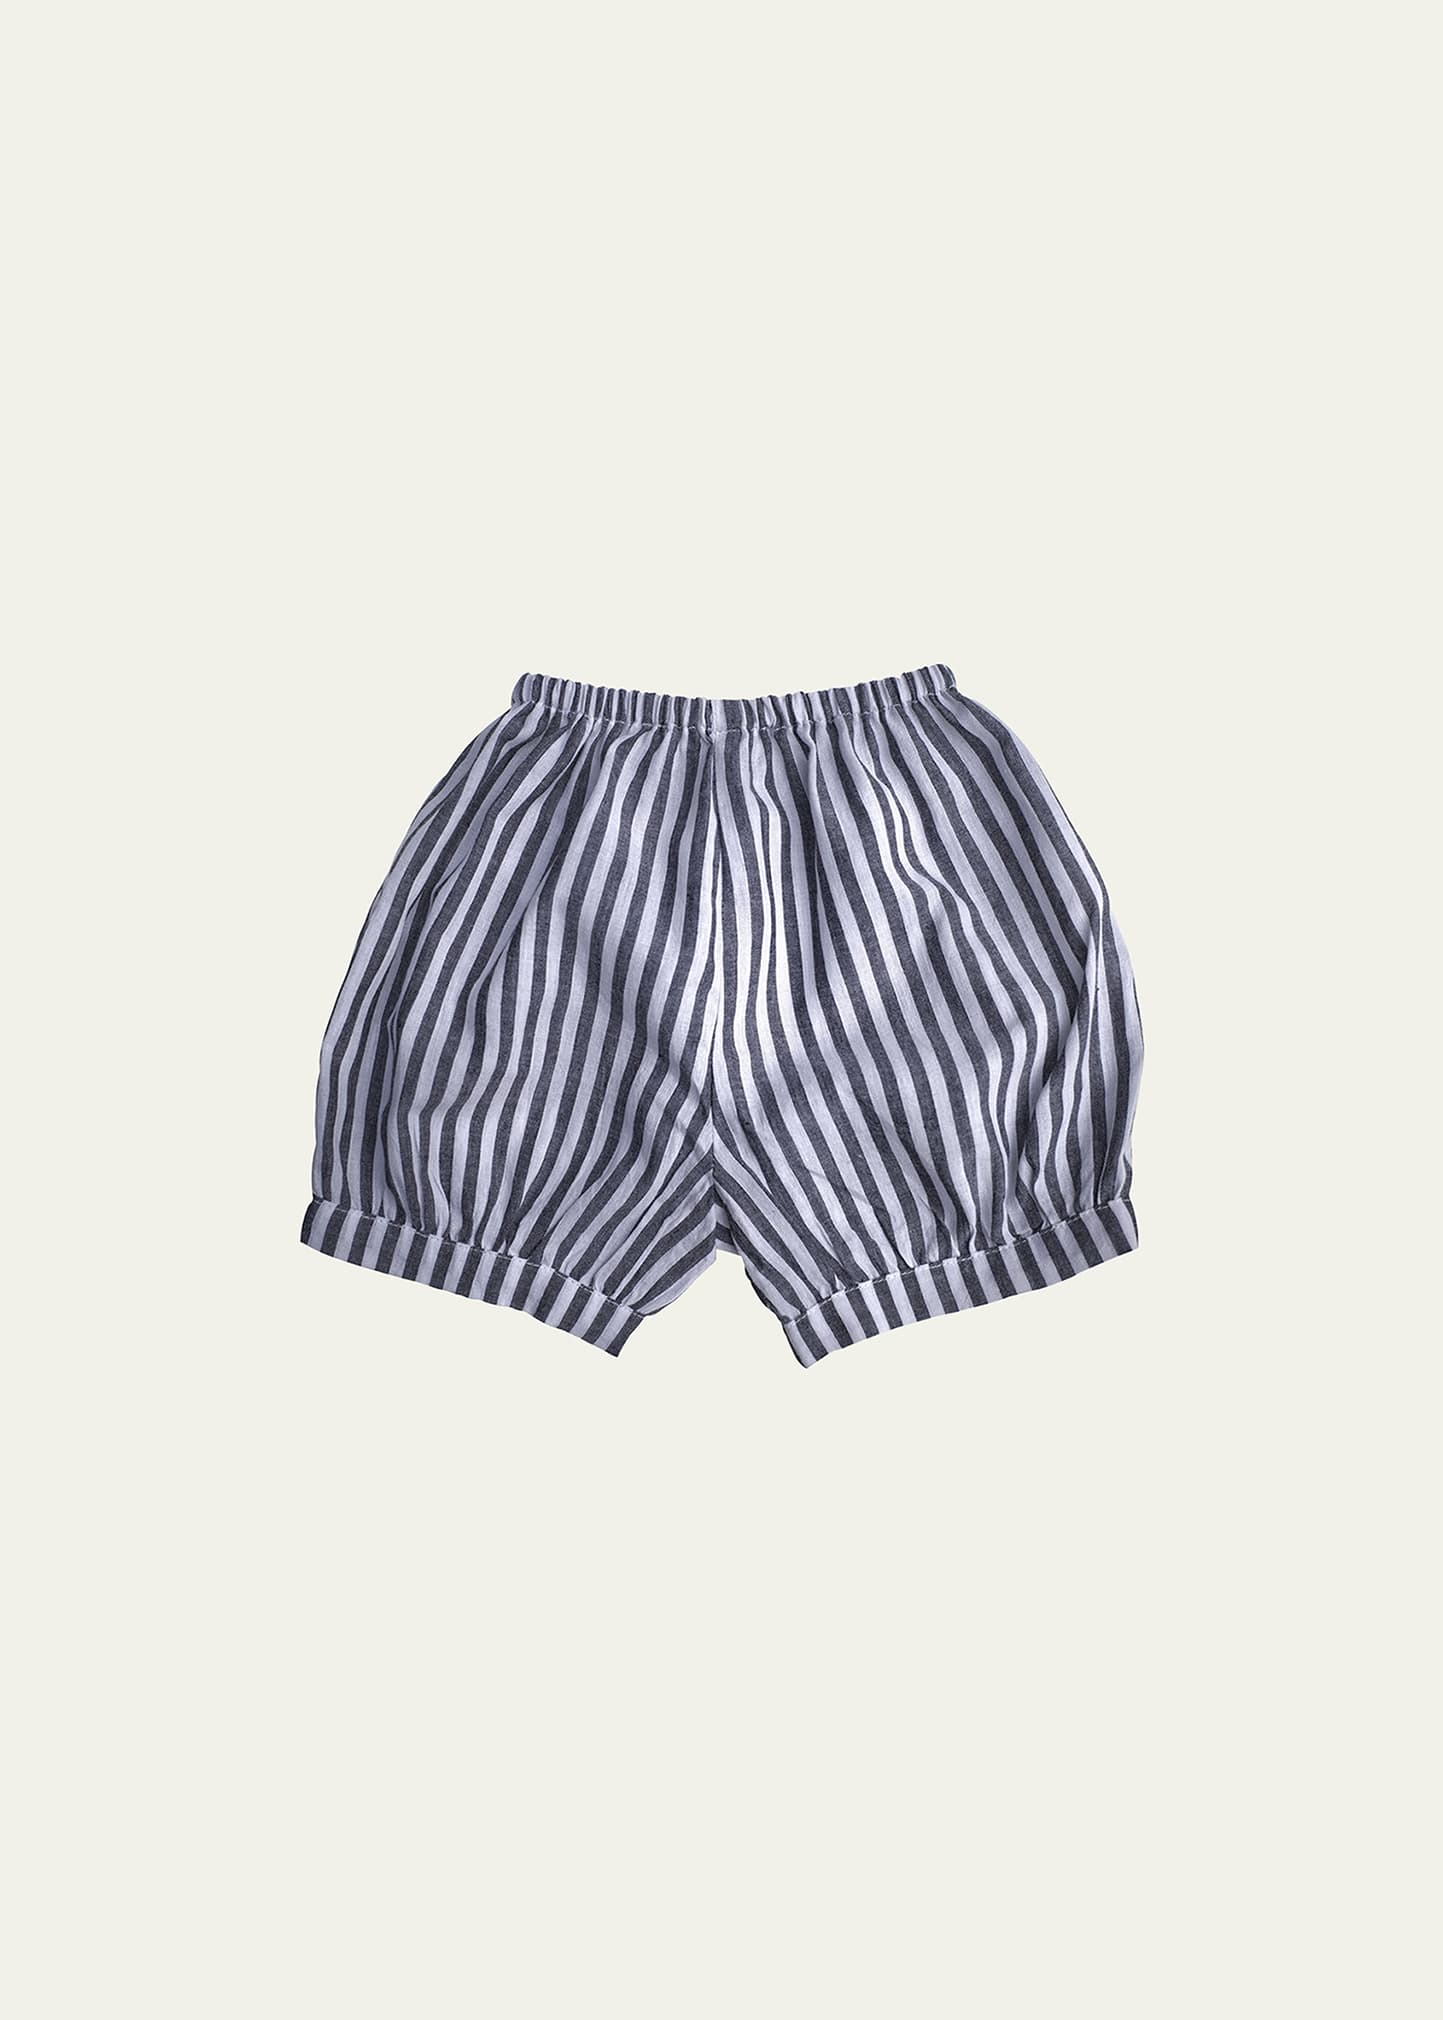 Louelle Boy's Harbor Island Stripe Shorts, Size Newborn-24M